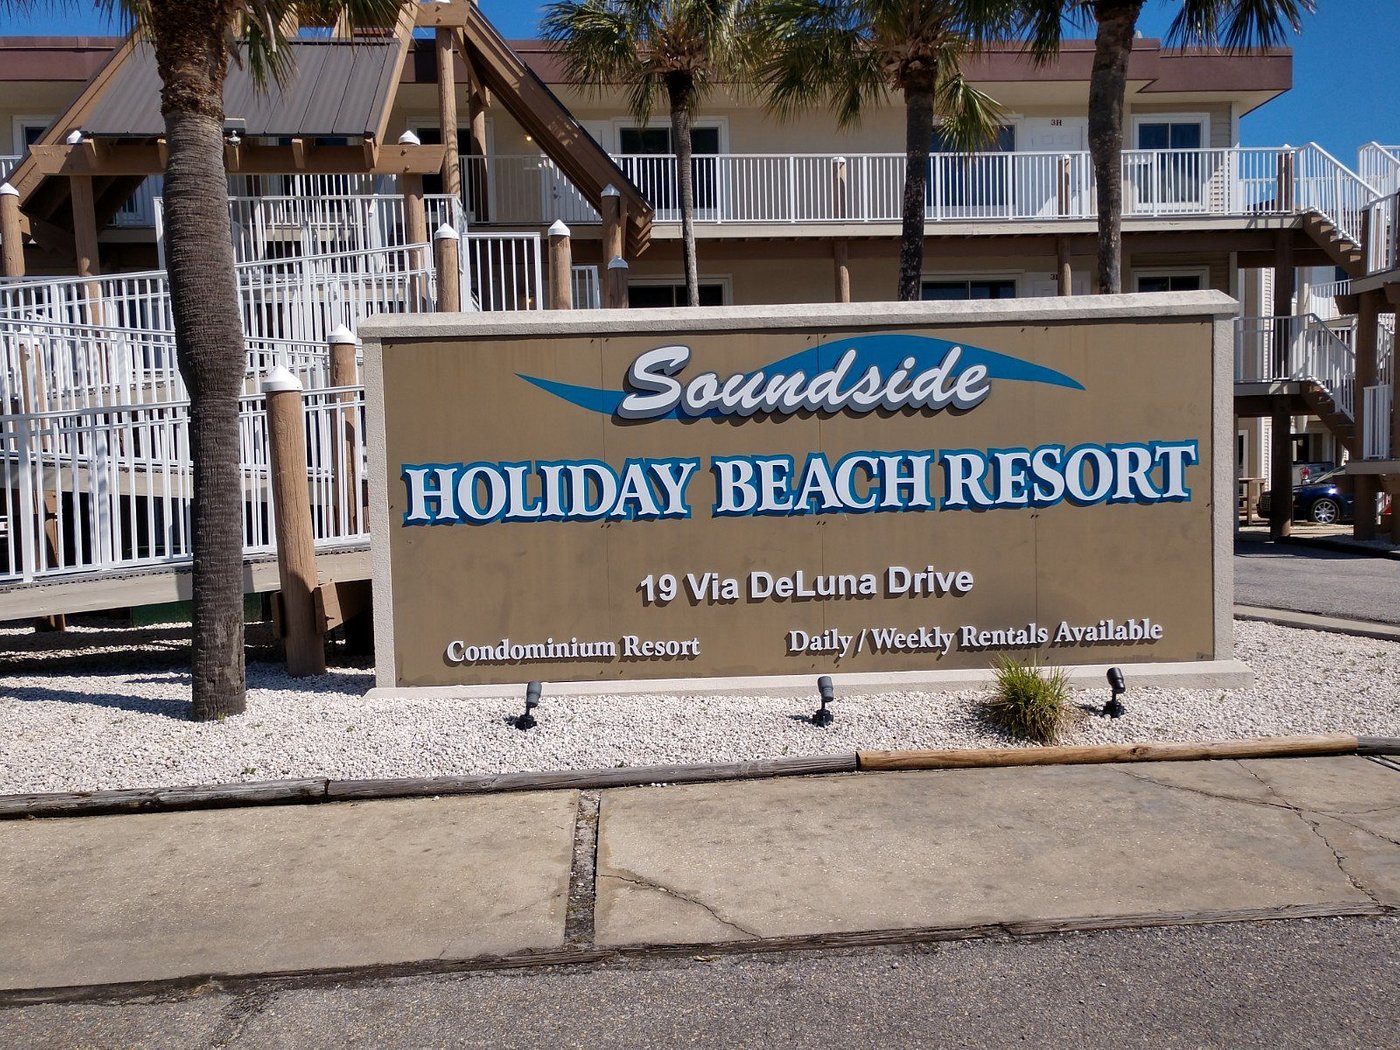 holiday beach resort soundside